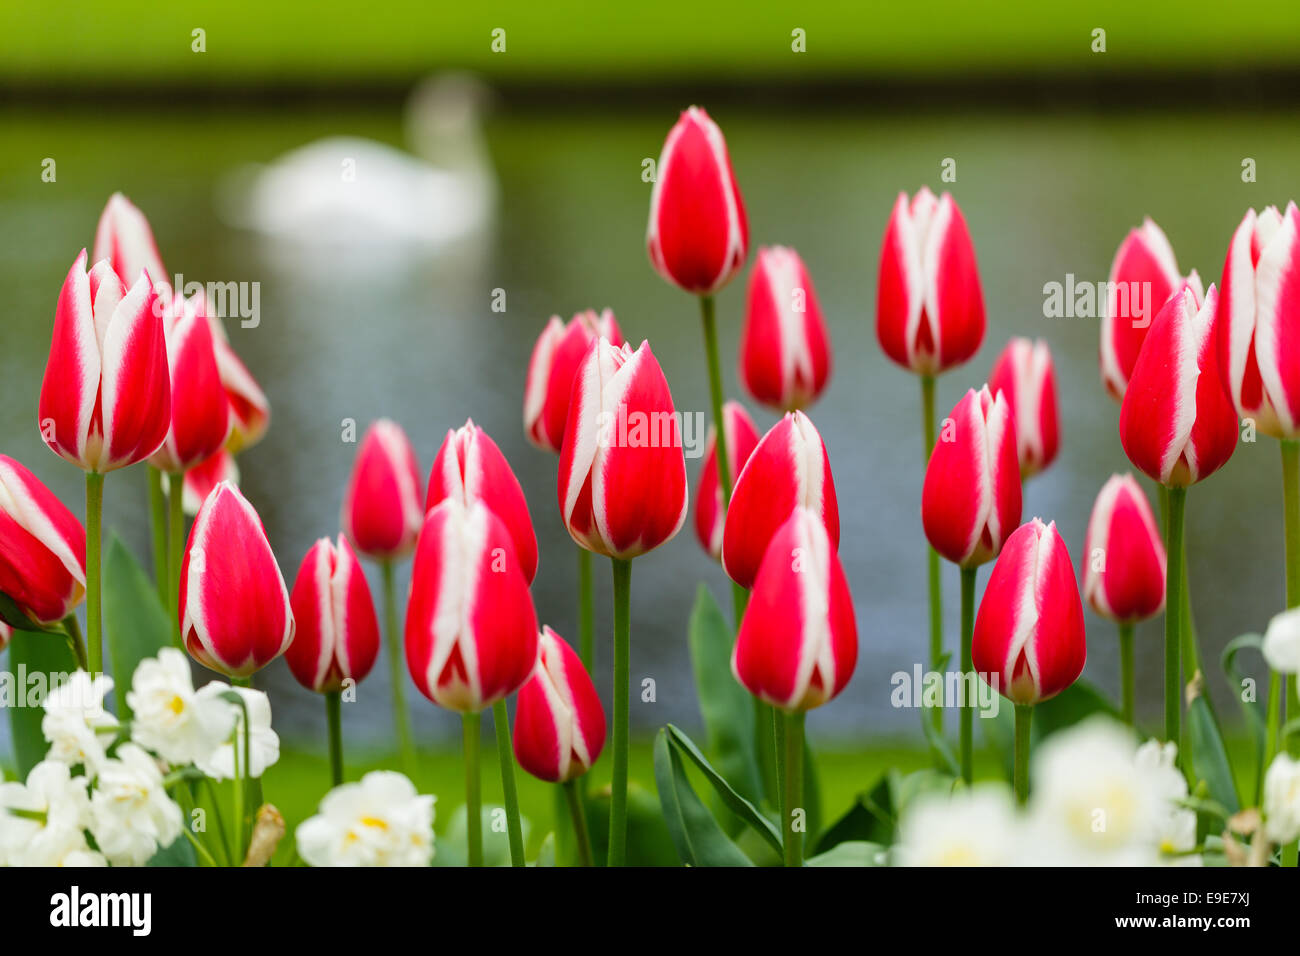 Rosa rot weiße Tulpe geringe Schärfentiefe Feld Bokeh Schwan jonquil Stockfoto